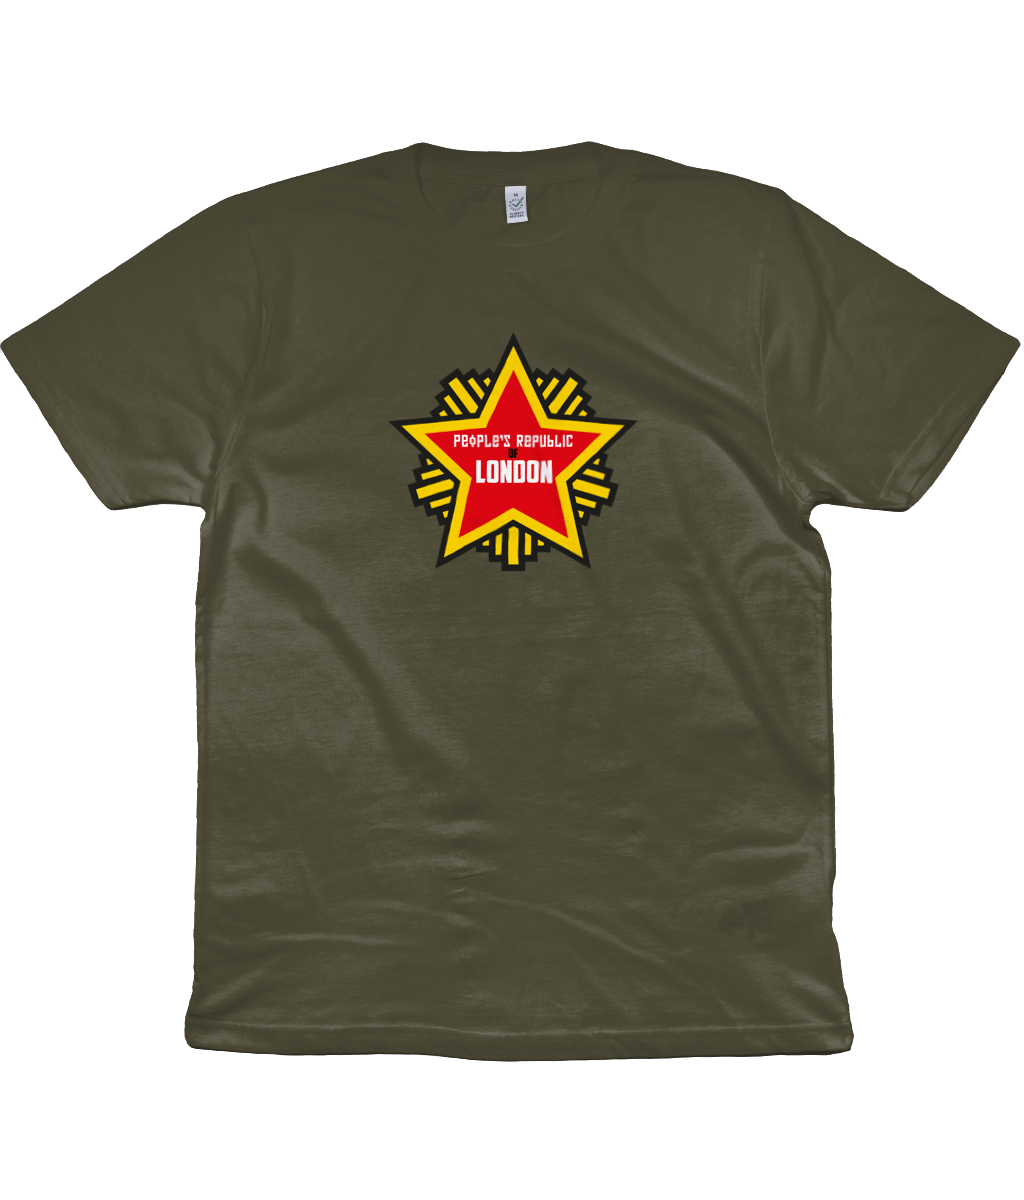 People's Republic of London Star Unisex T-Shirt